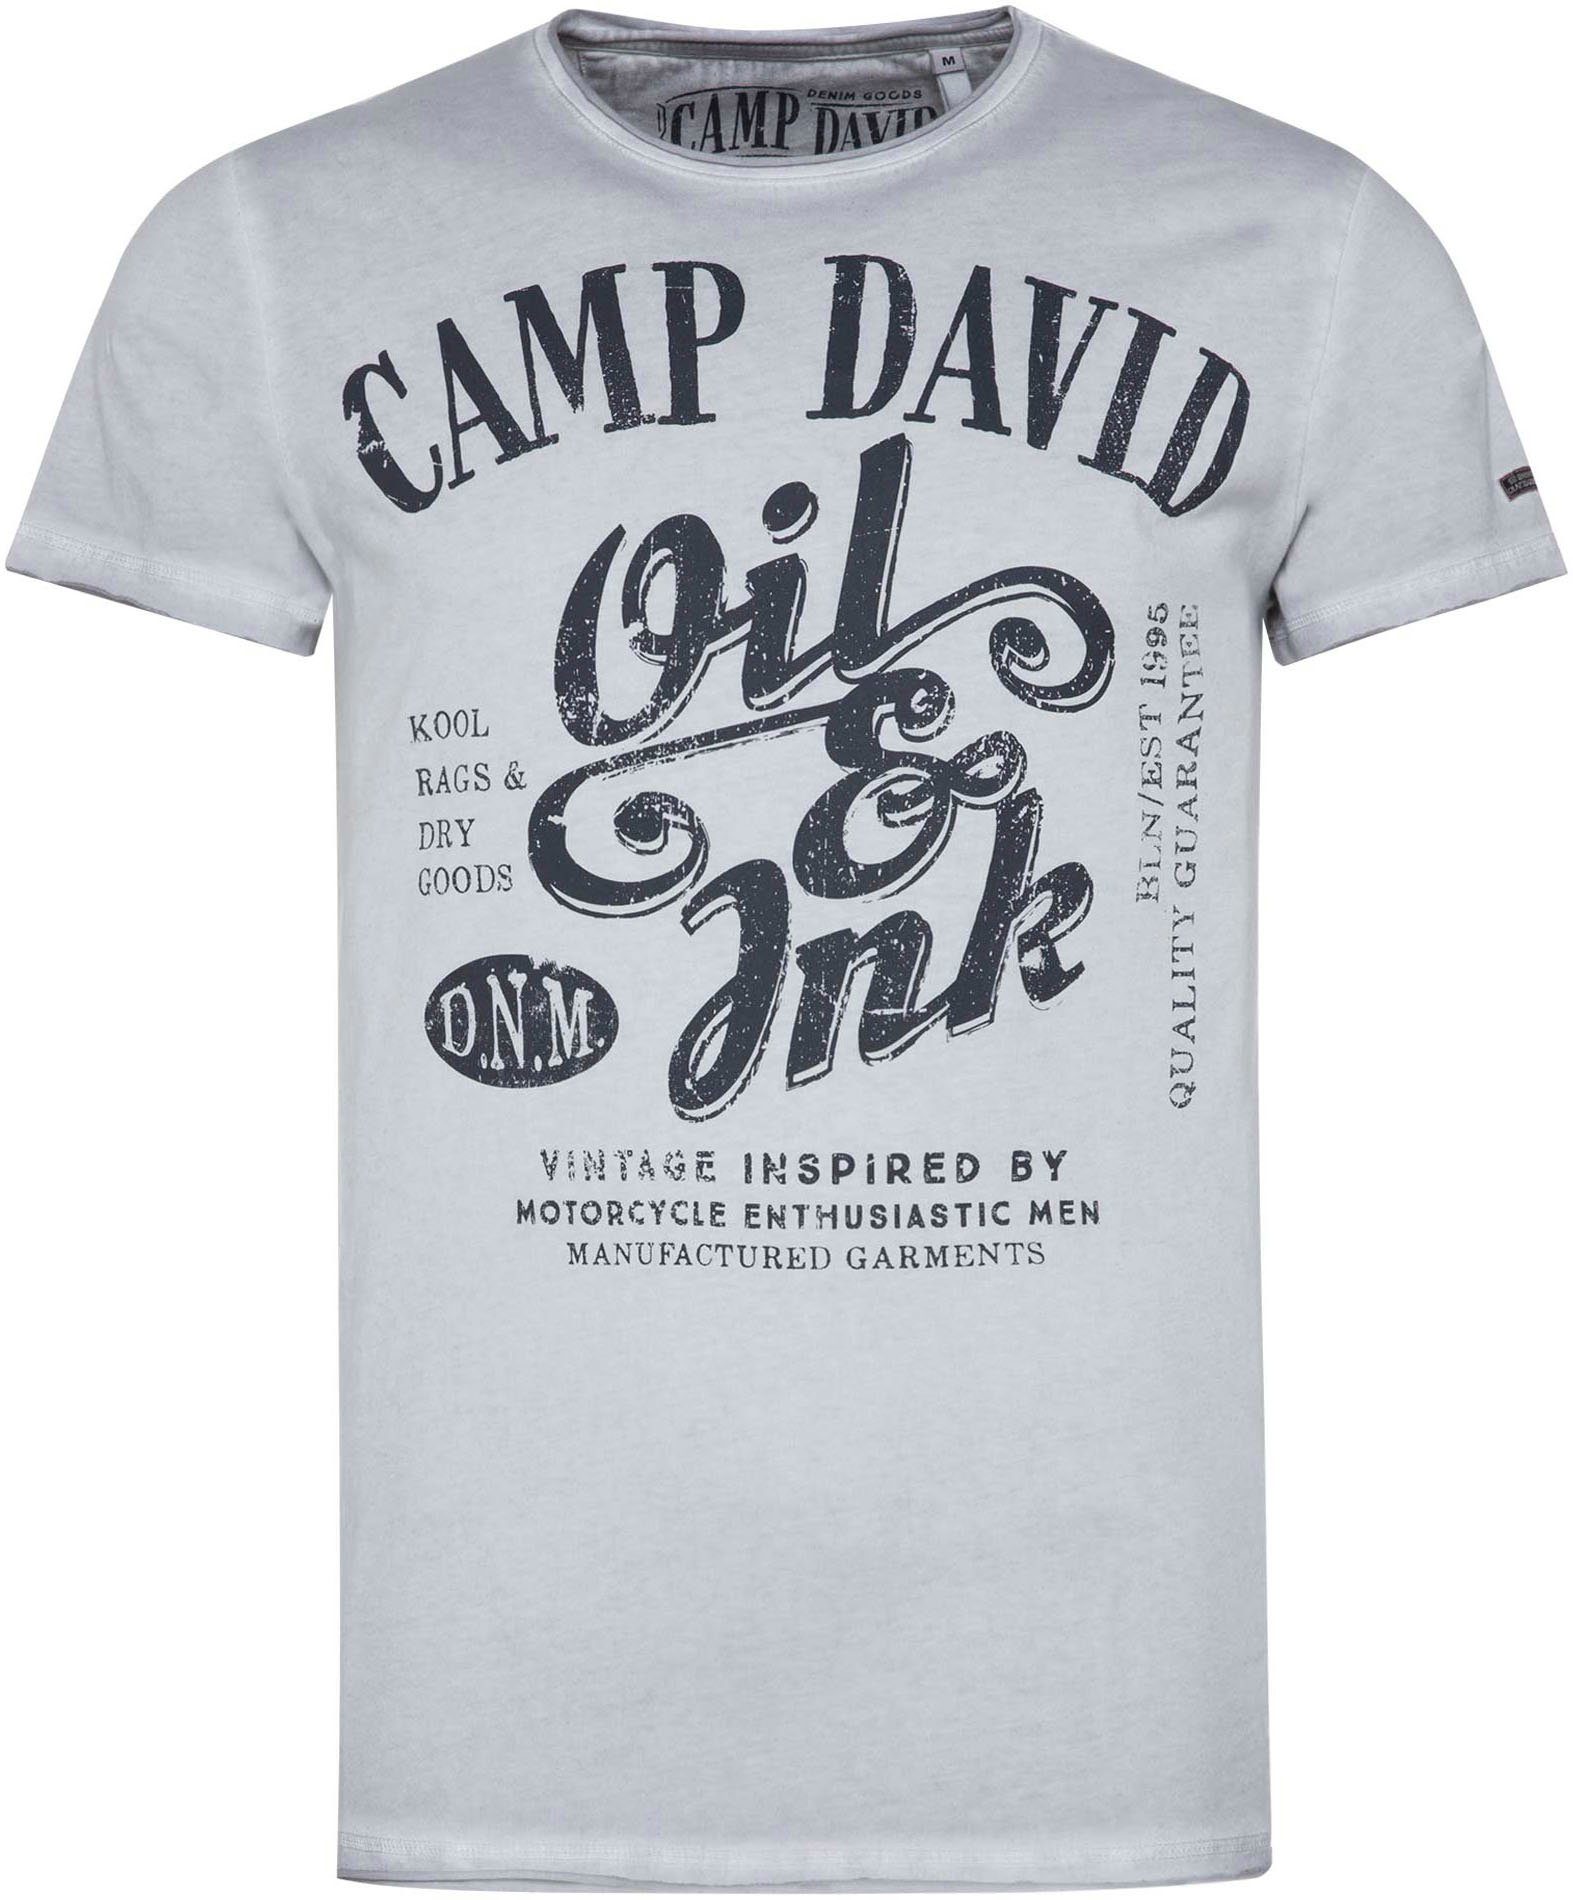 DAVID CAMP T-Shirt faded sky